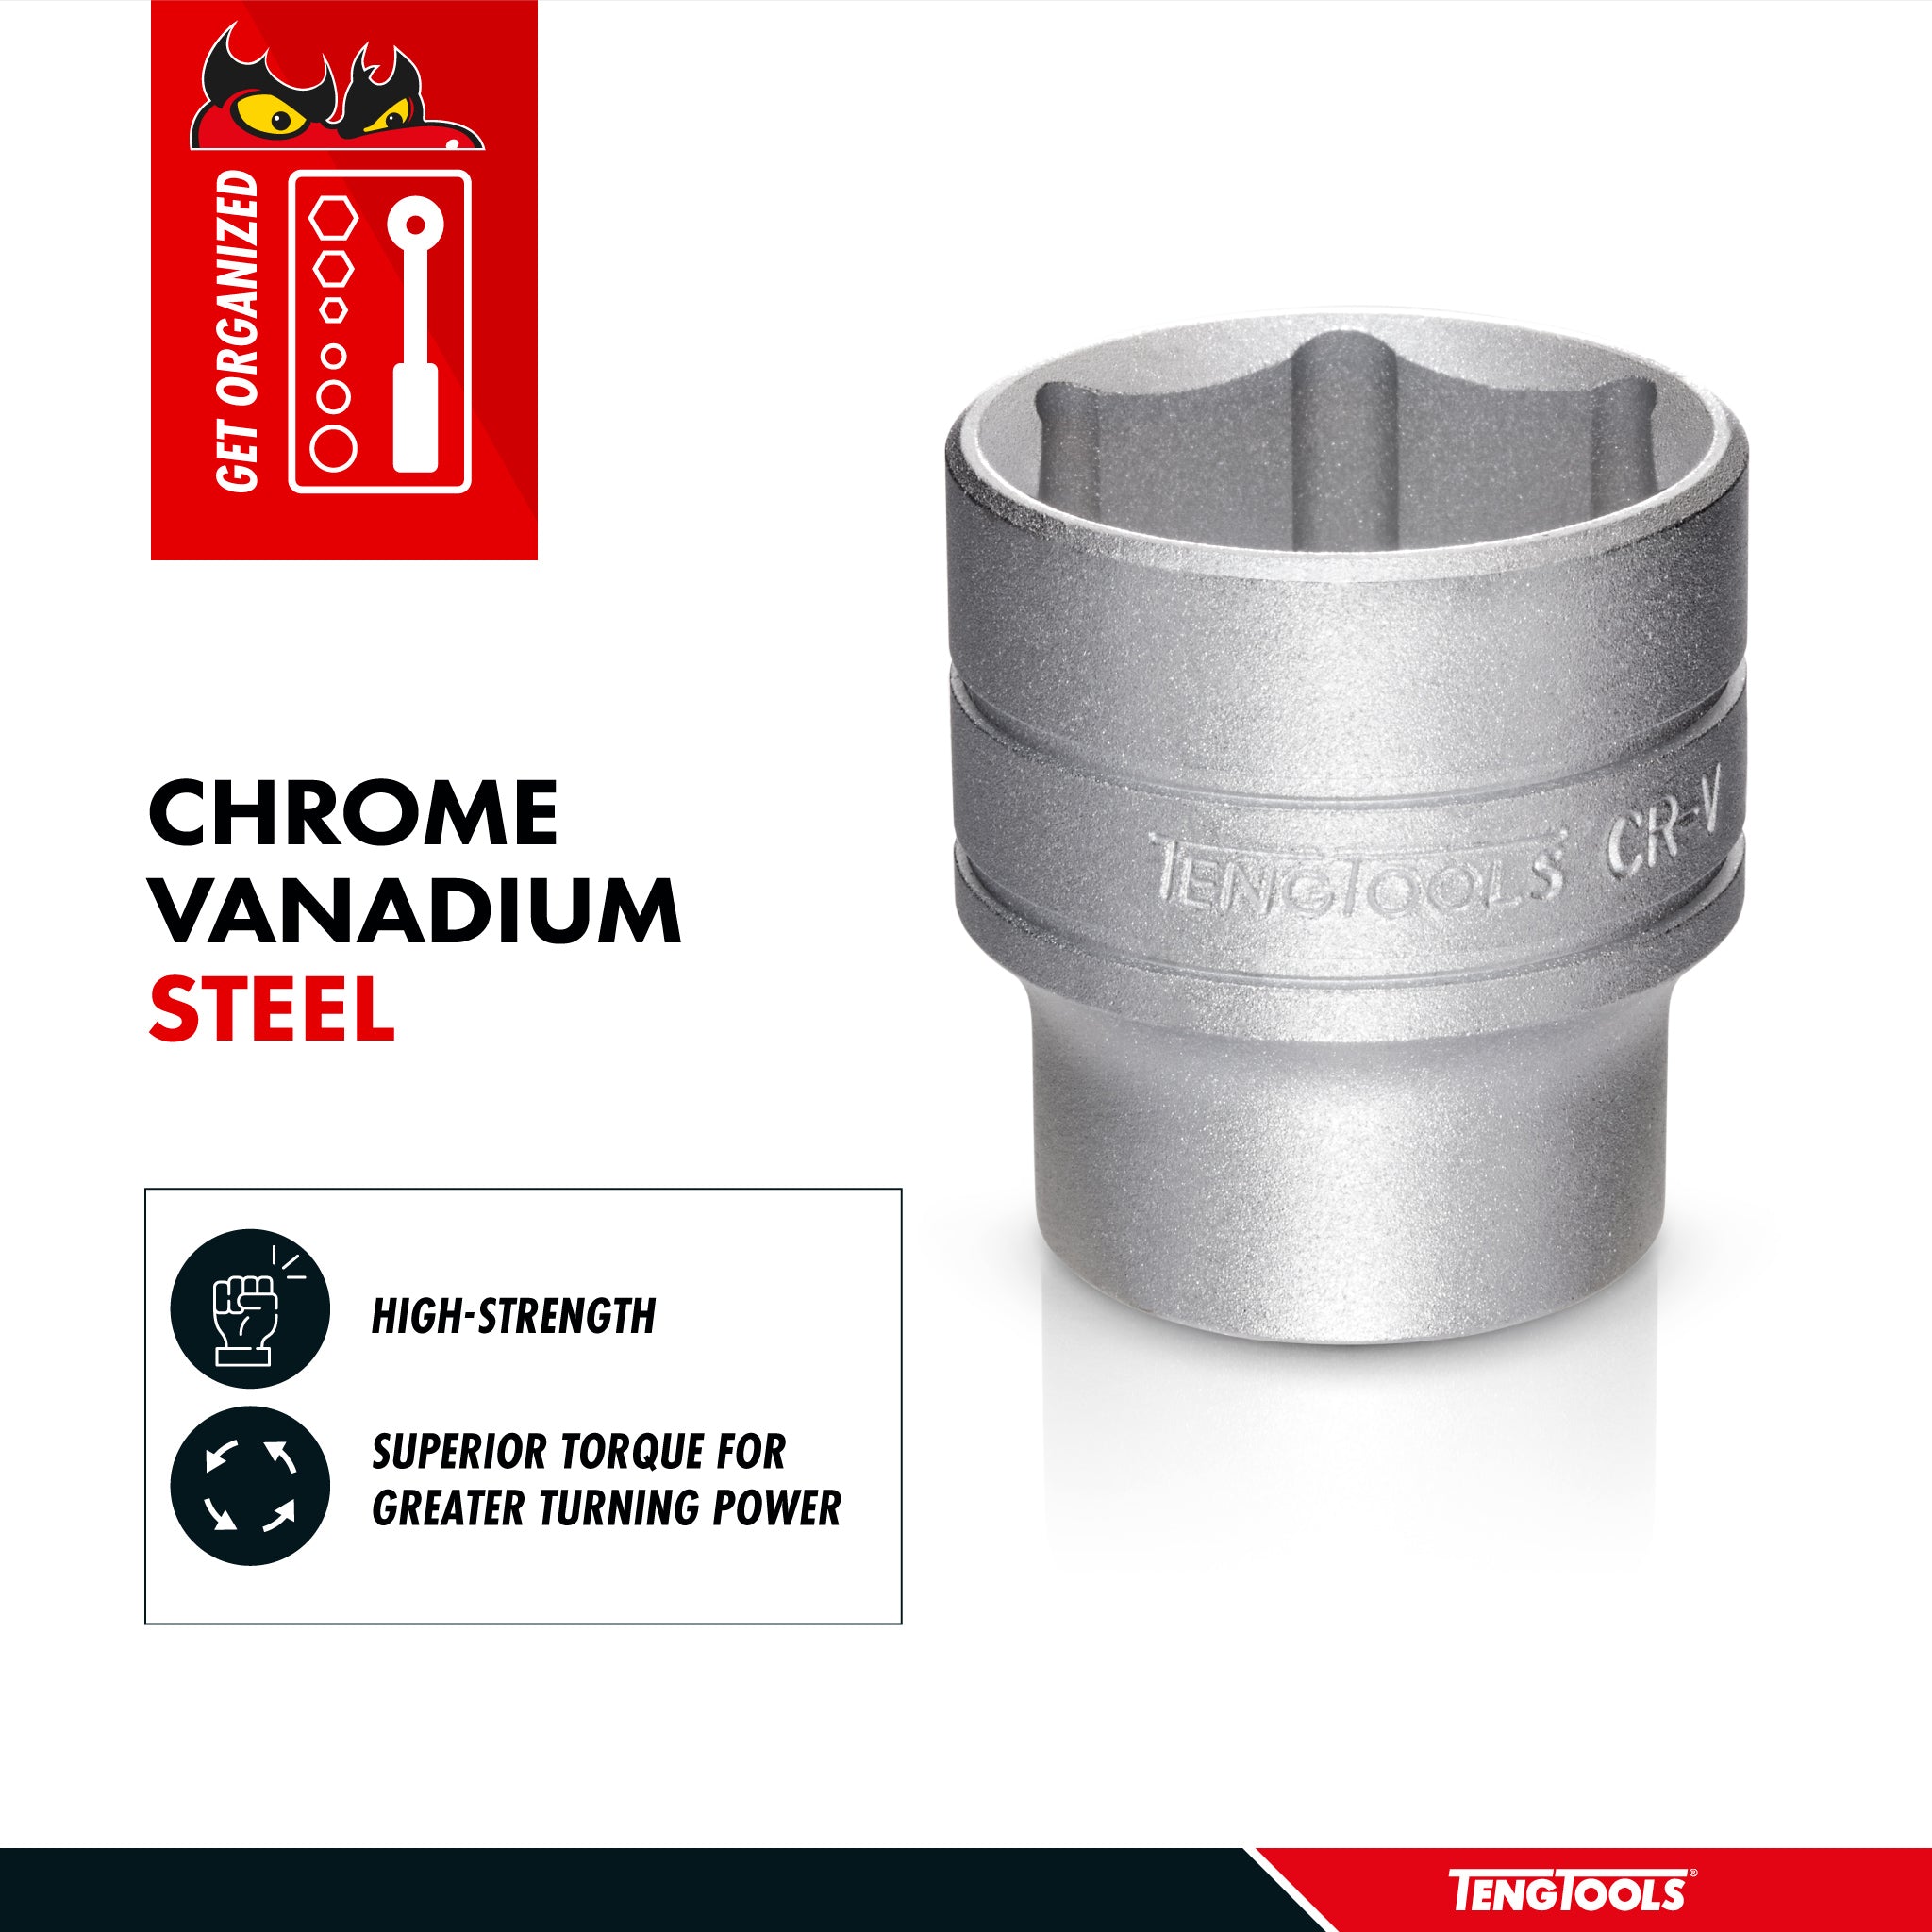 Teng Tools 6 Point SAE Shallow 3/8 Inch Drive Chrome Vanadium Sockets